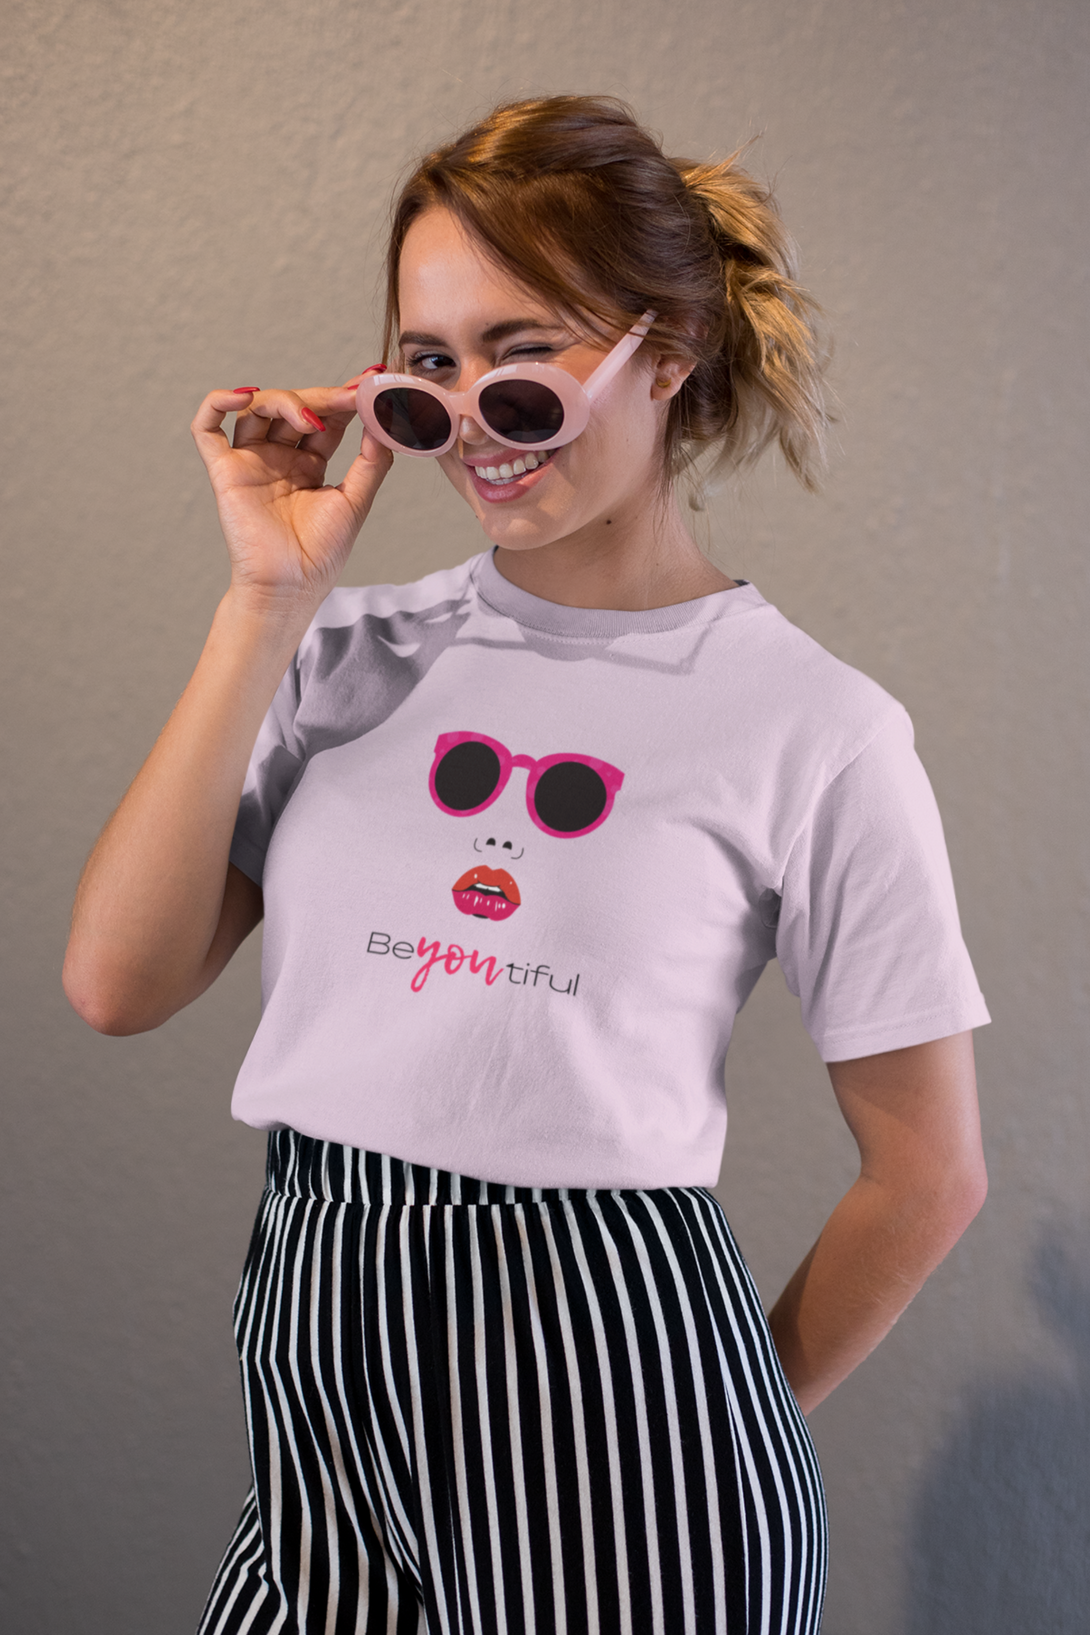 Beyoutiful Printed T-Shirt For Women - WowWaves - 4